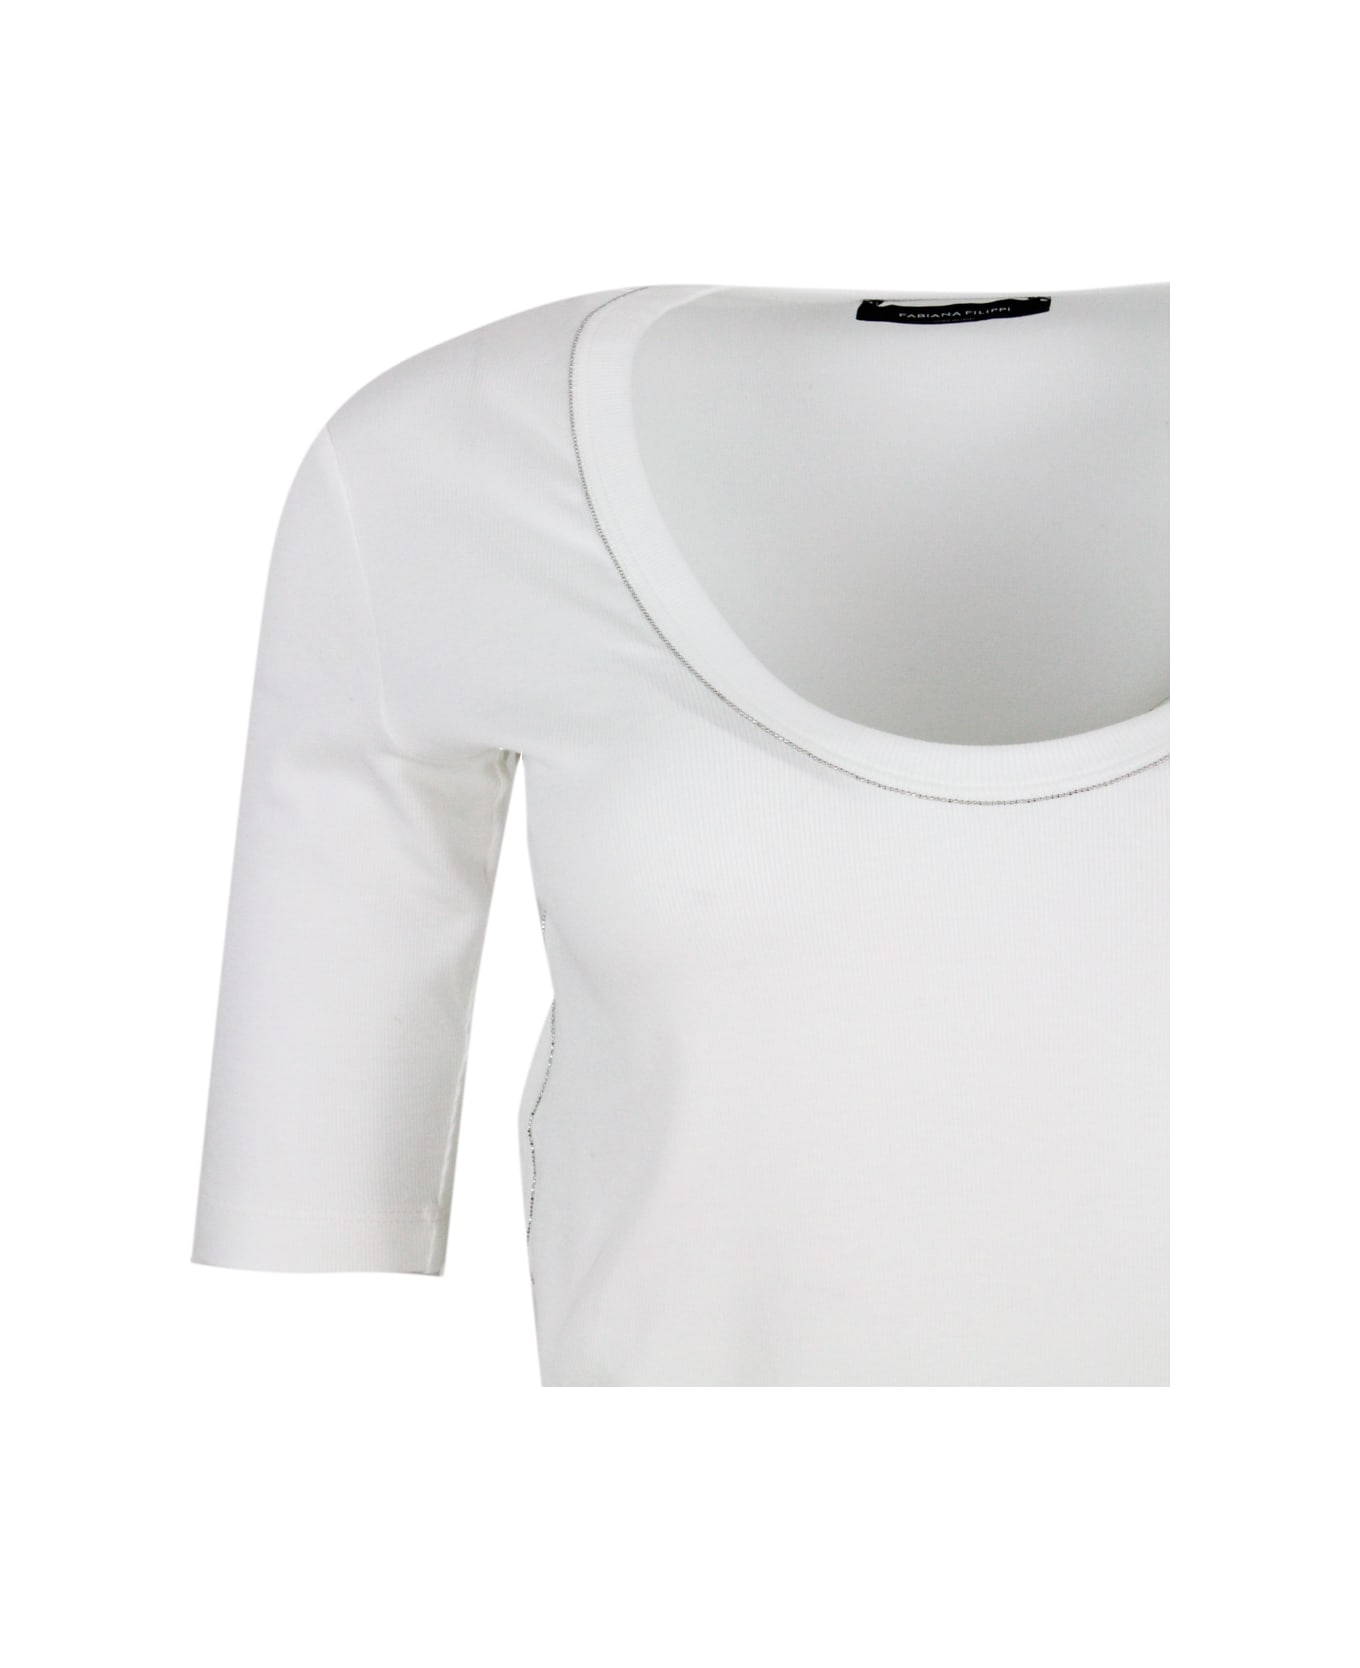 Fabiana Filippi Ribbed Cotton T-shirt With U-neck, Elbow-length Sleeves Embellished With Rows Of Monili On The Neck And Sides - WHITE